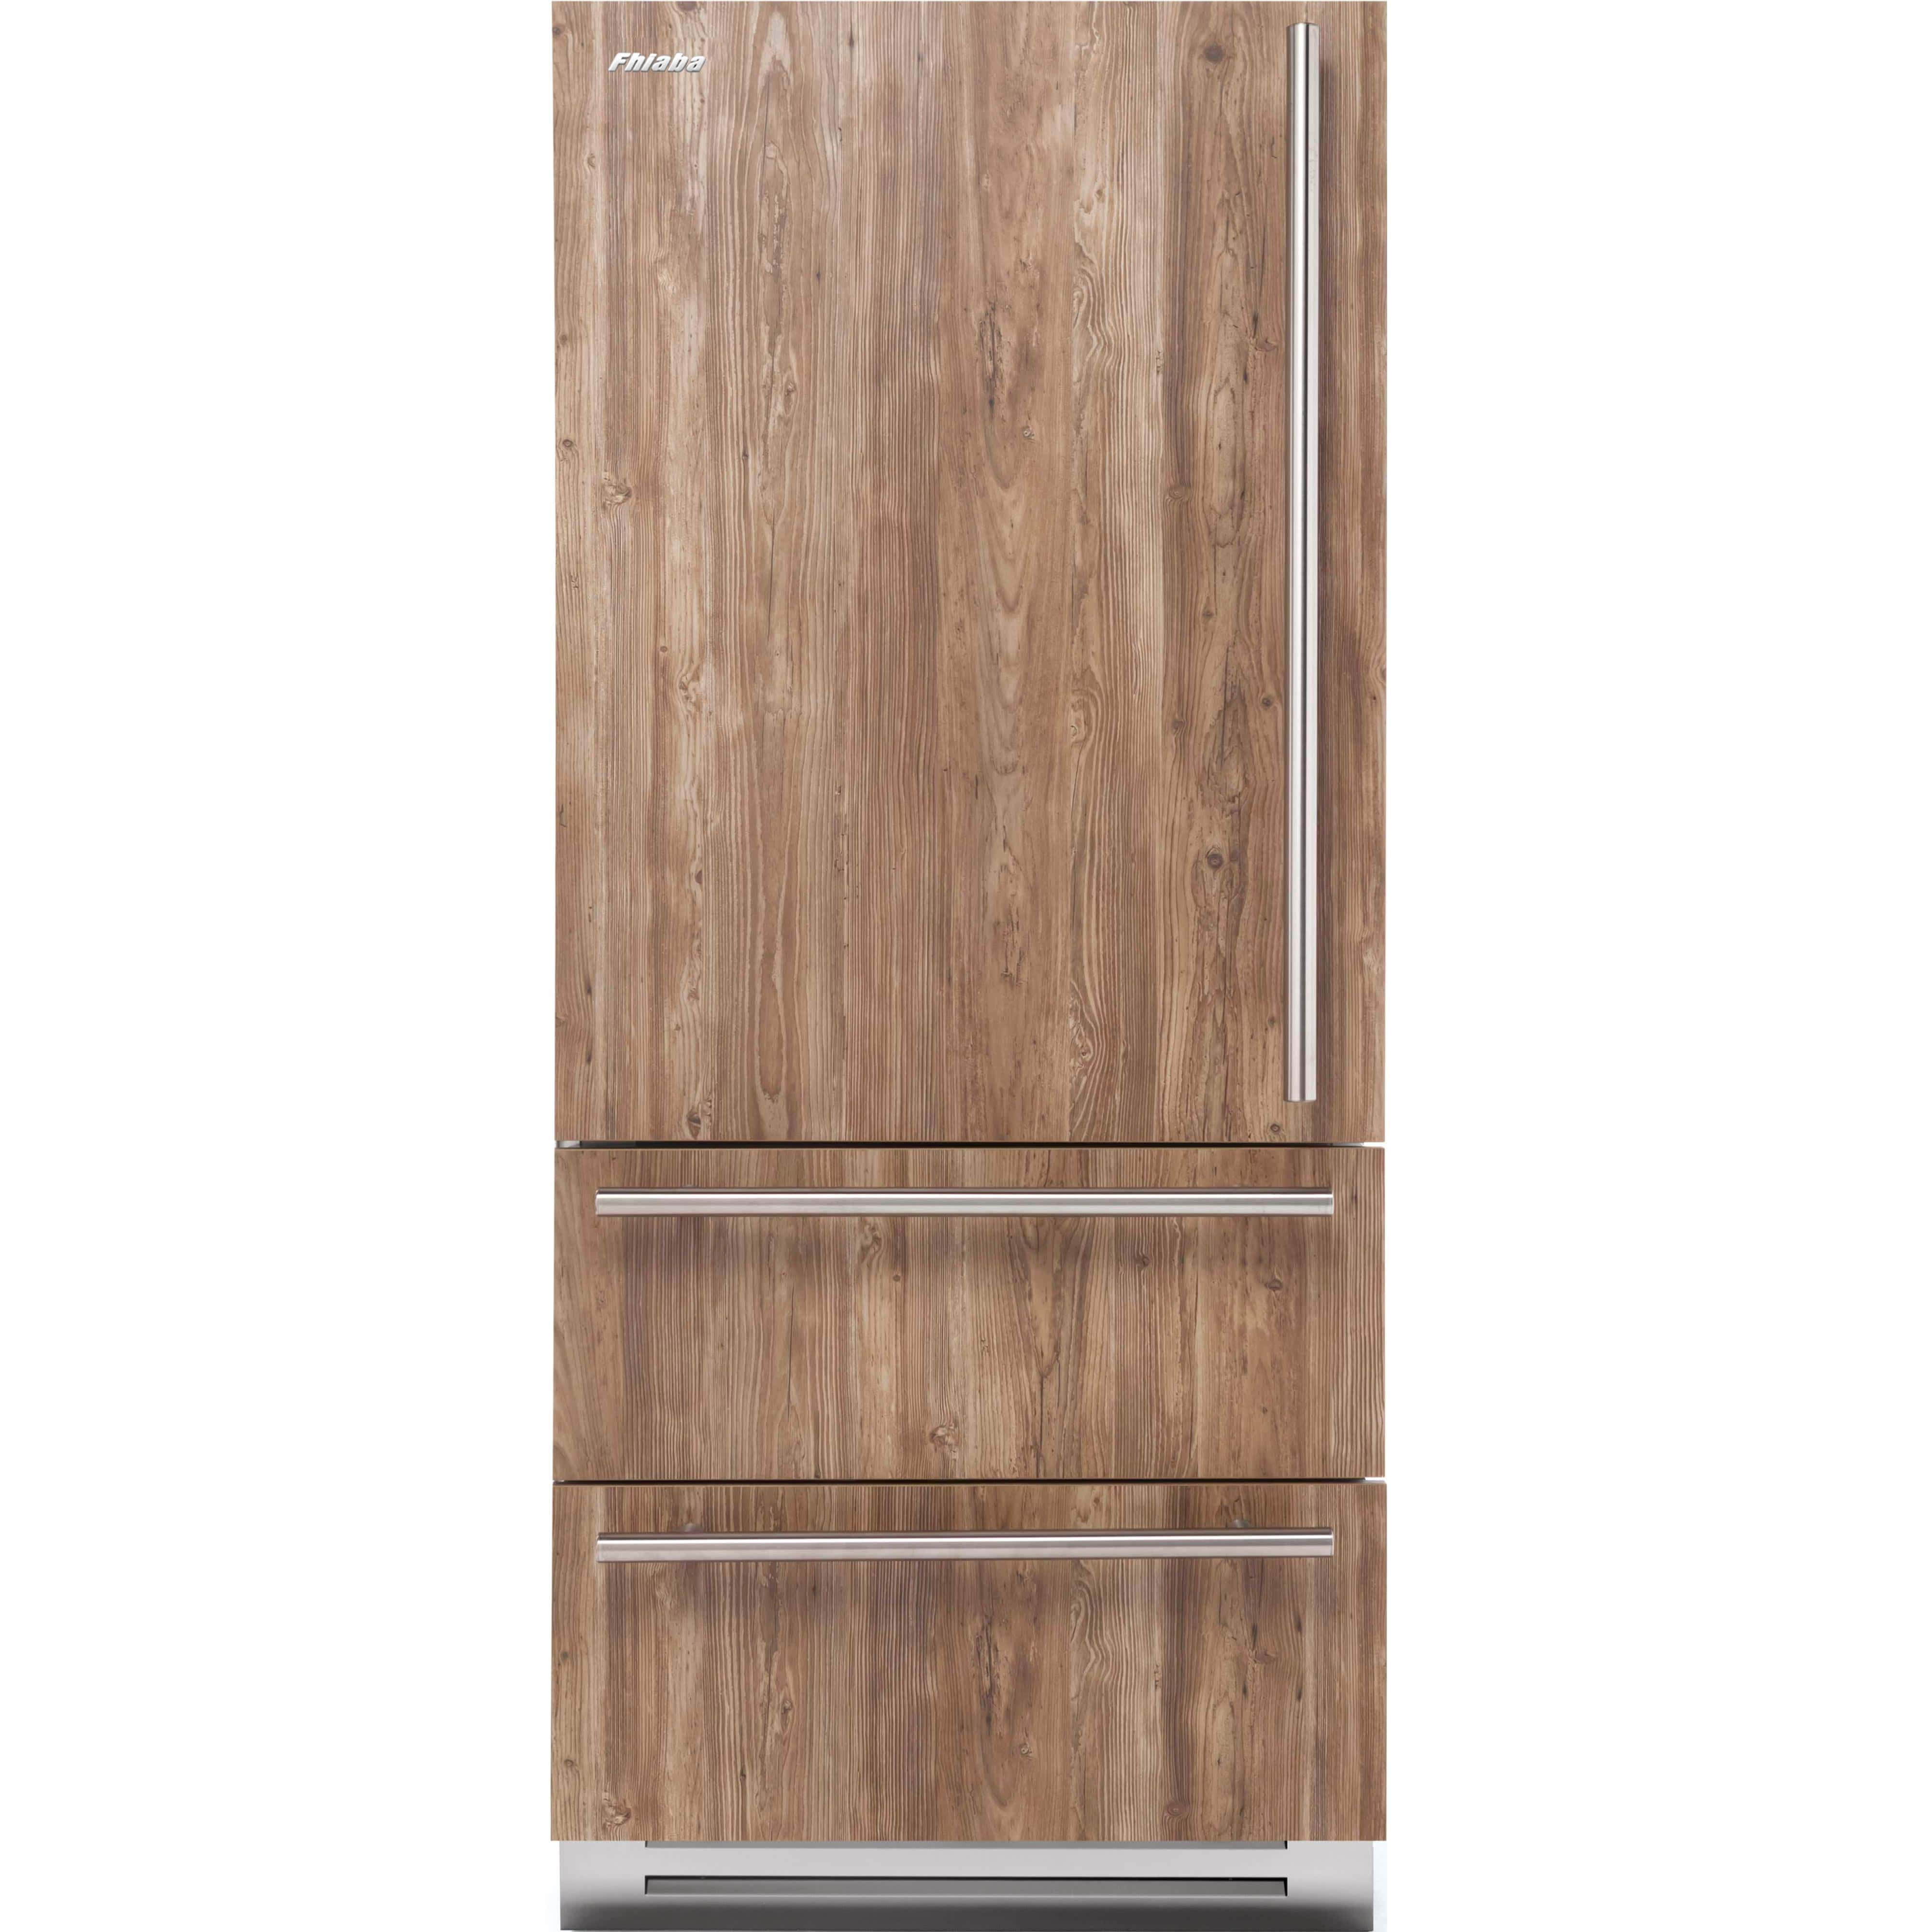 Fhiaba 36-inch Bottom Freezer Refrigerator FI36BDI-LO1 Refrigerators FI36BDILO1 Luxury Appliances Direct